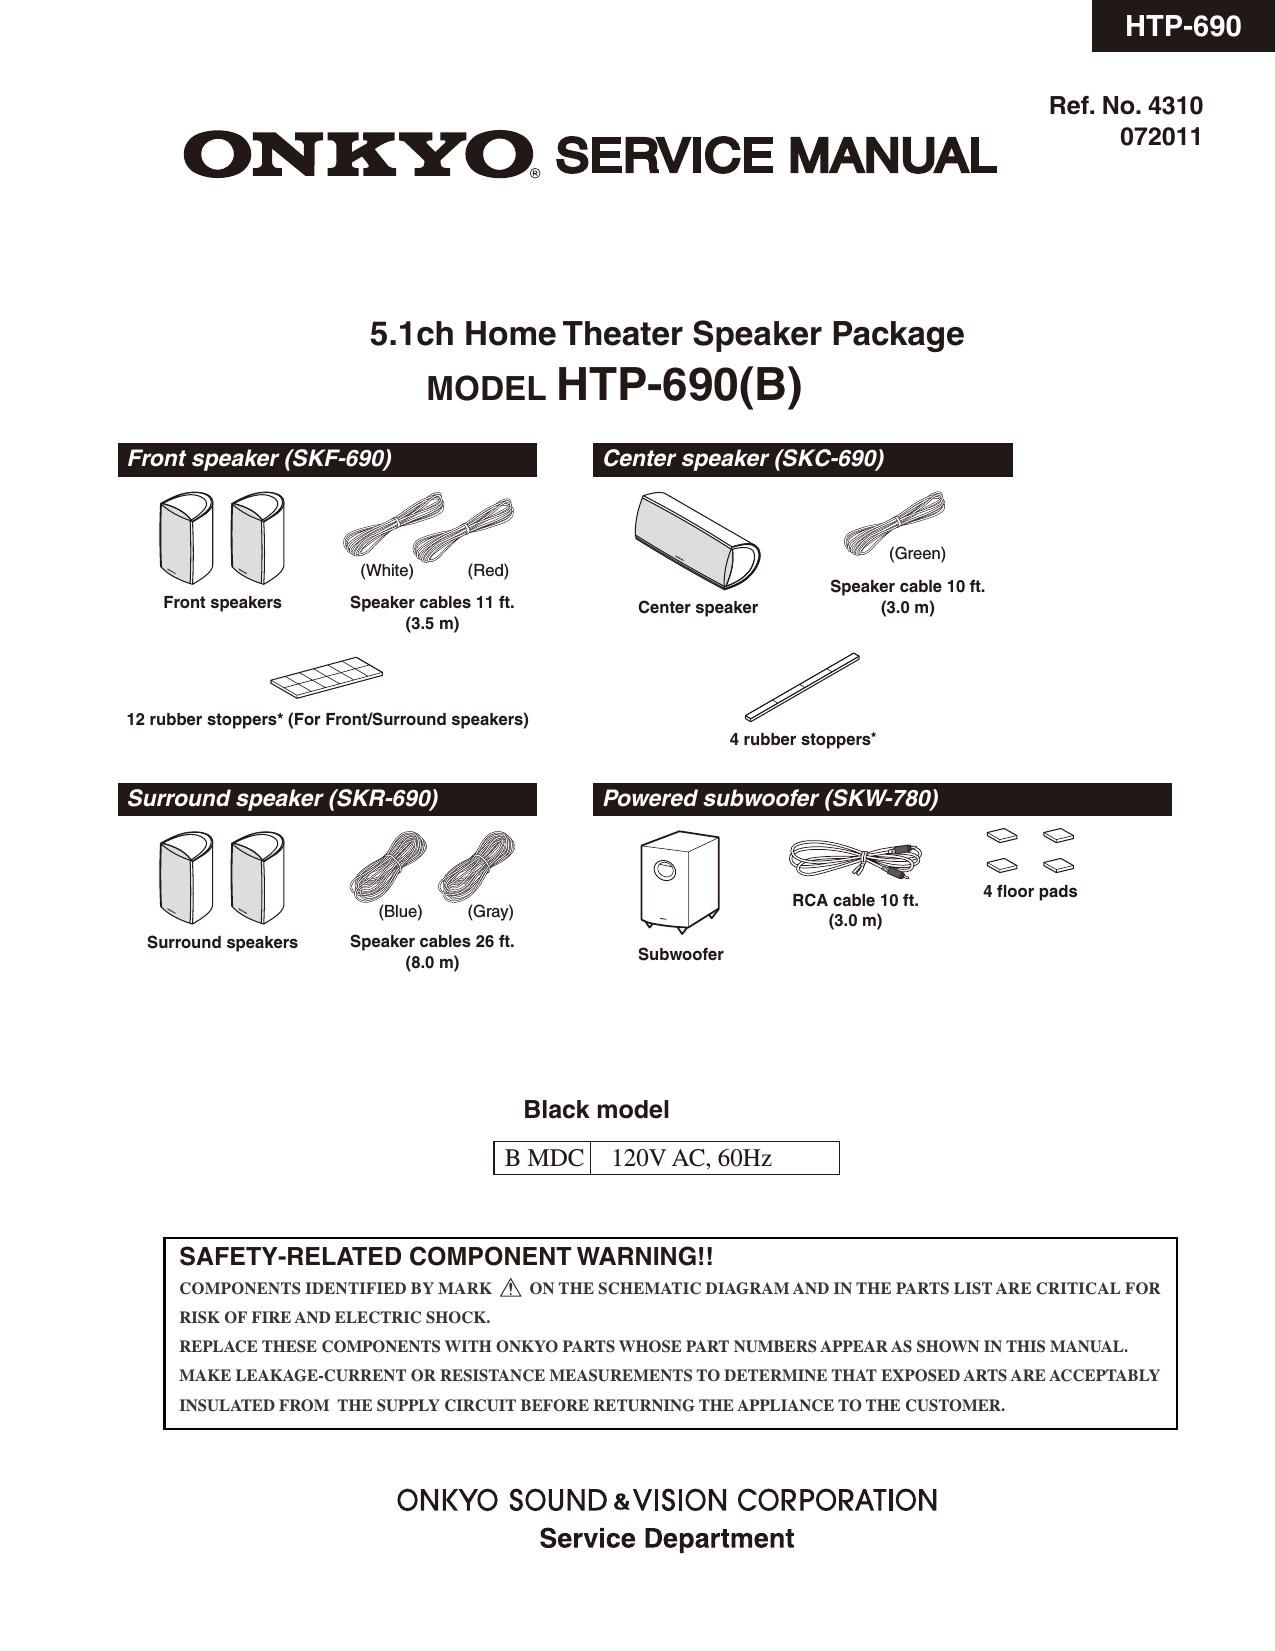 Onkyo HTP 690 Service Manual